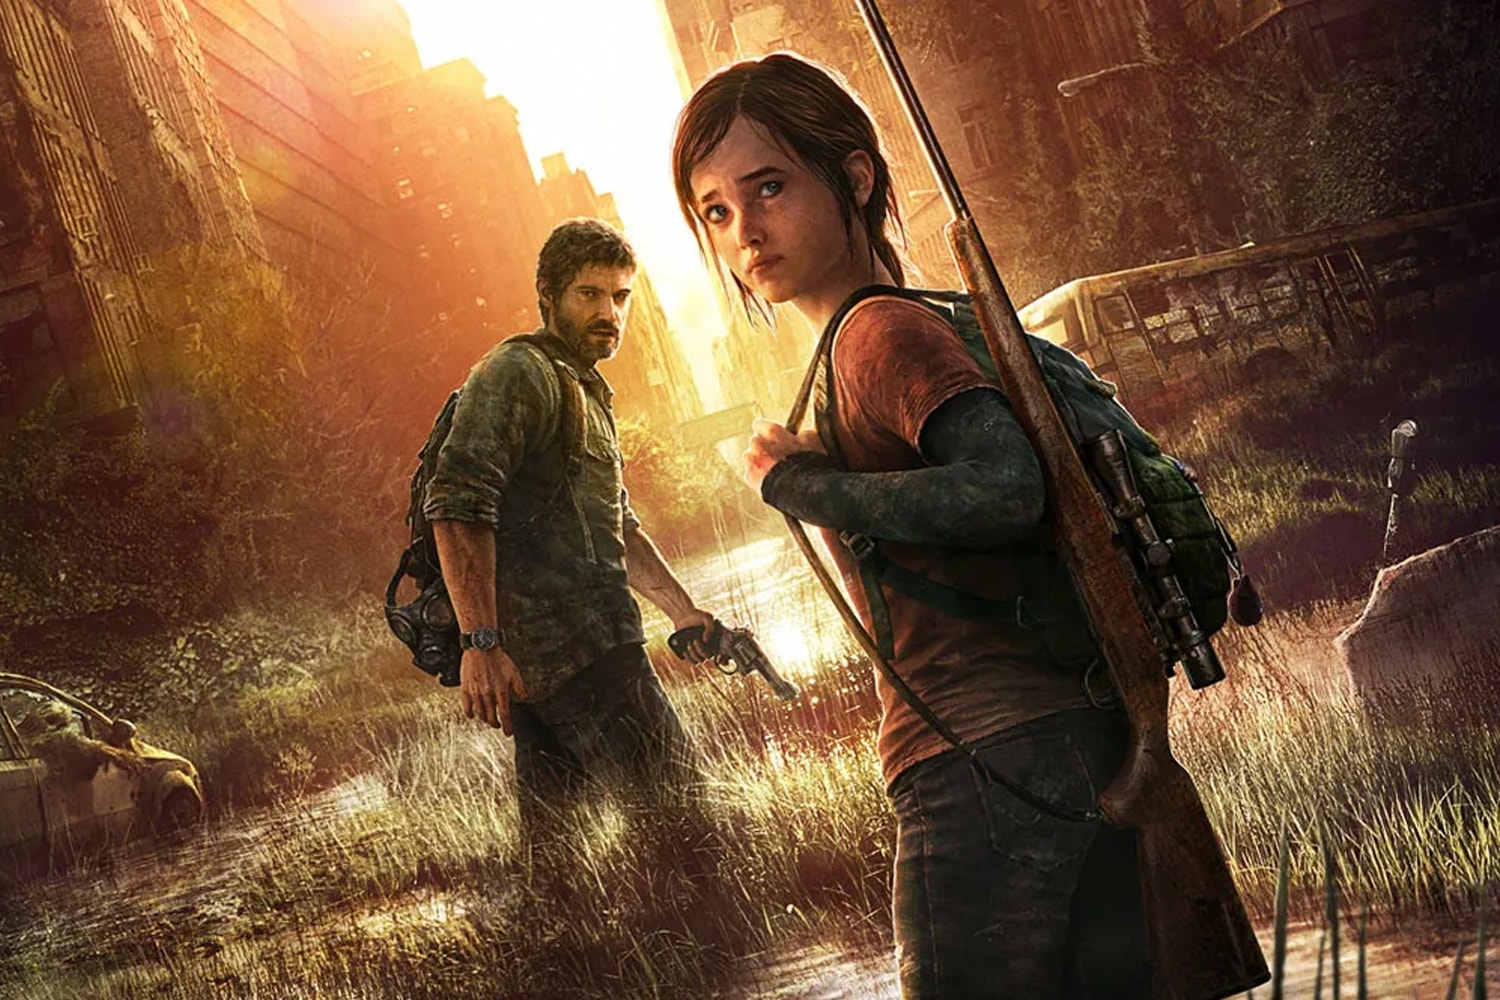 Neil Druckmann 暗示未來有望推出《最後生還者 The Last of Us》遊戲第三部曲